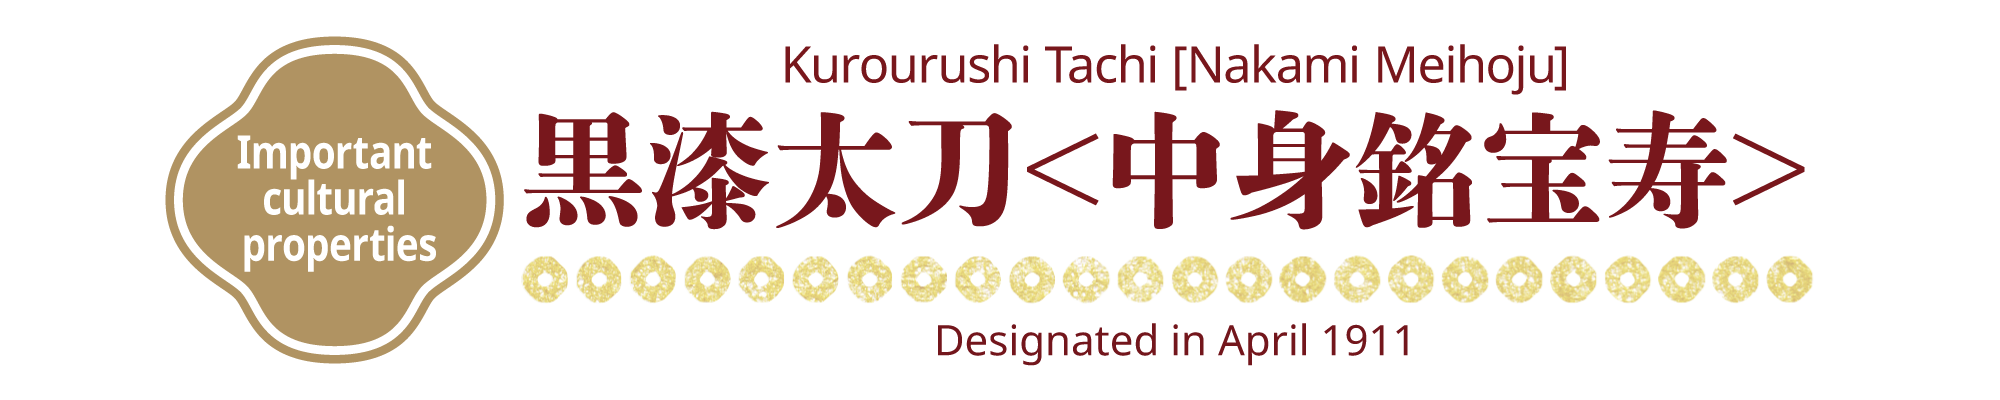 [Important cultural properties] Kurourushi Tachi [Nakami Meihoju], Designated in April 1911